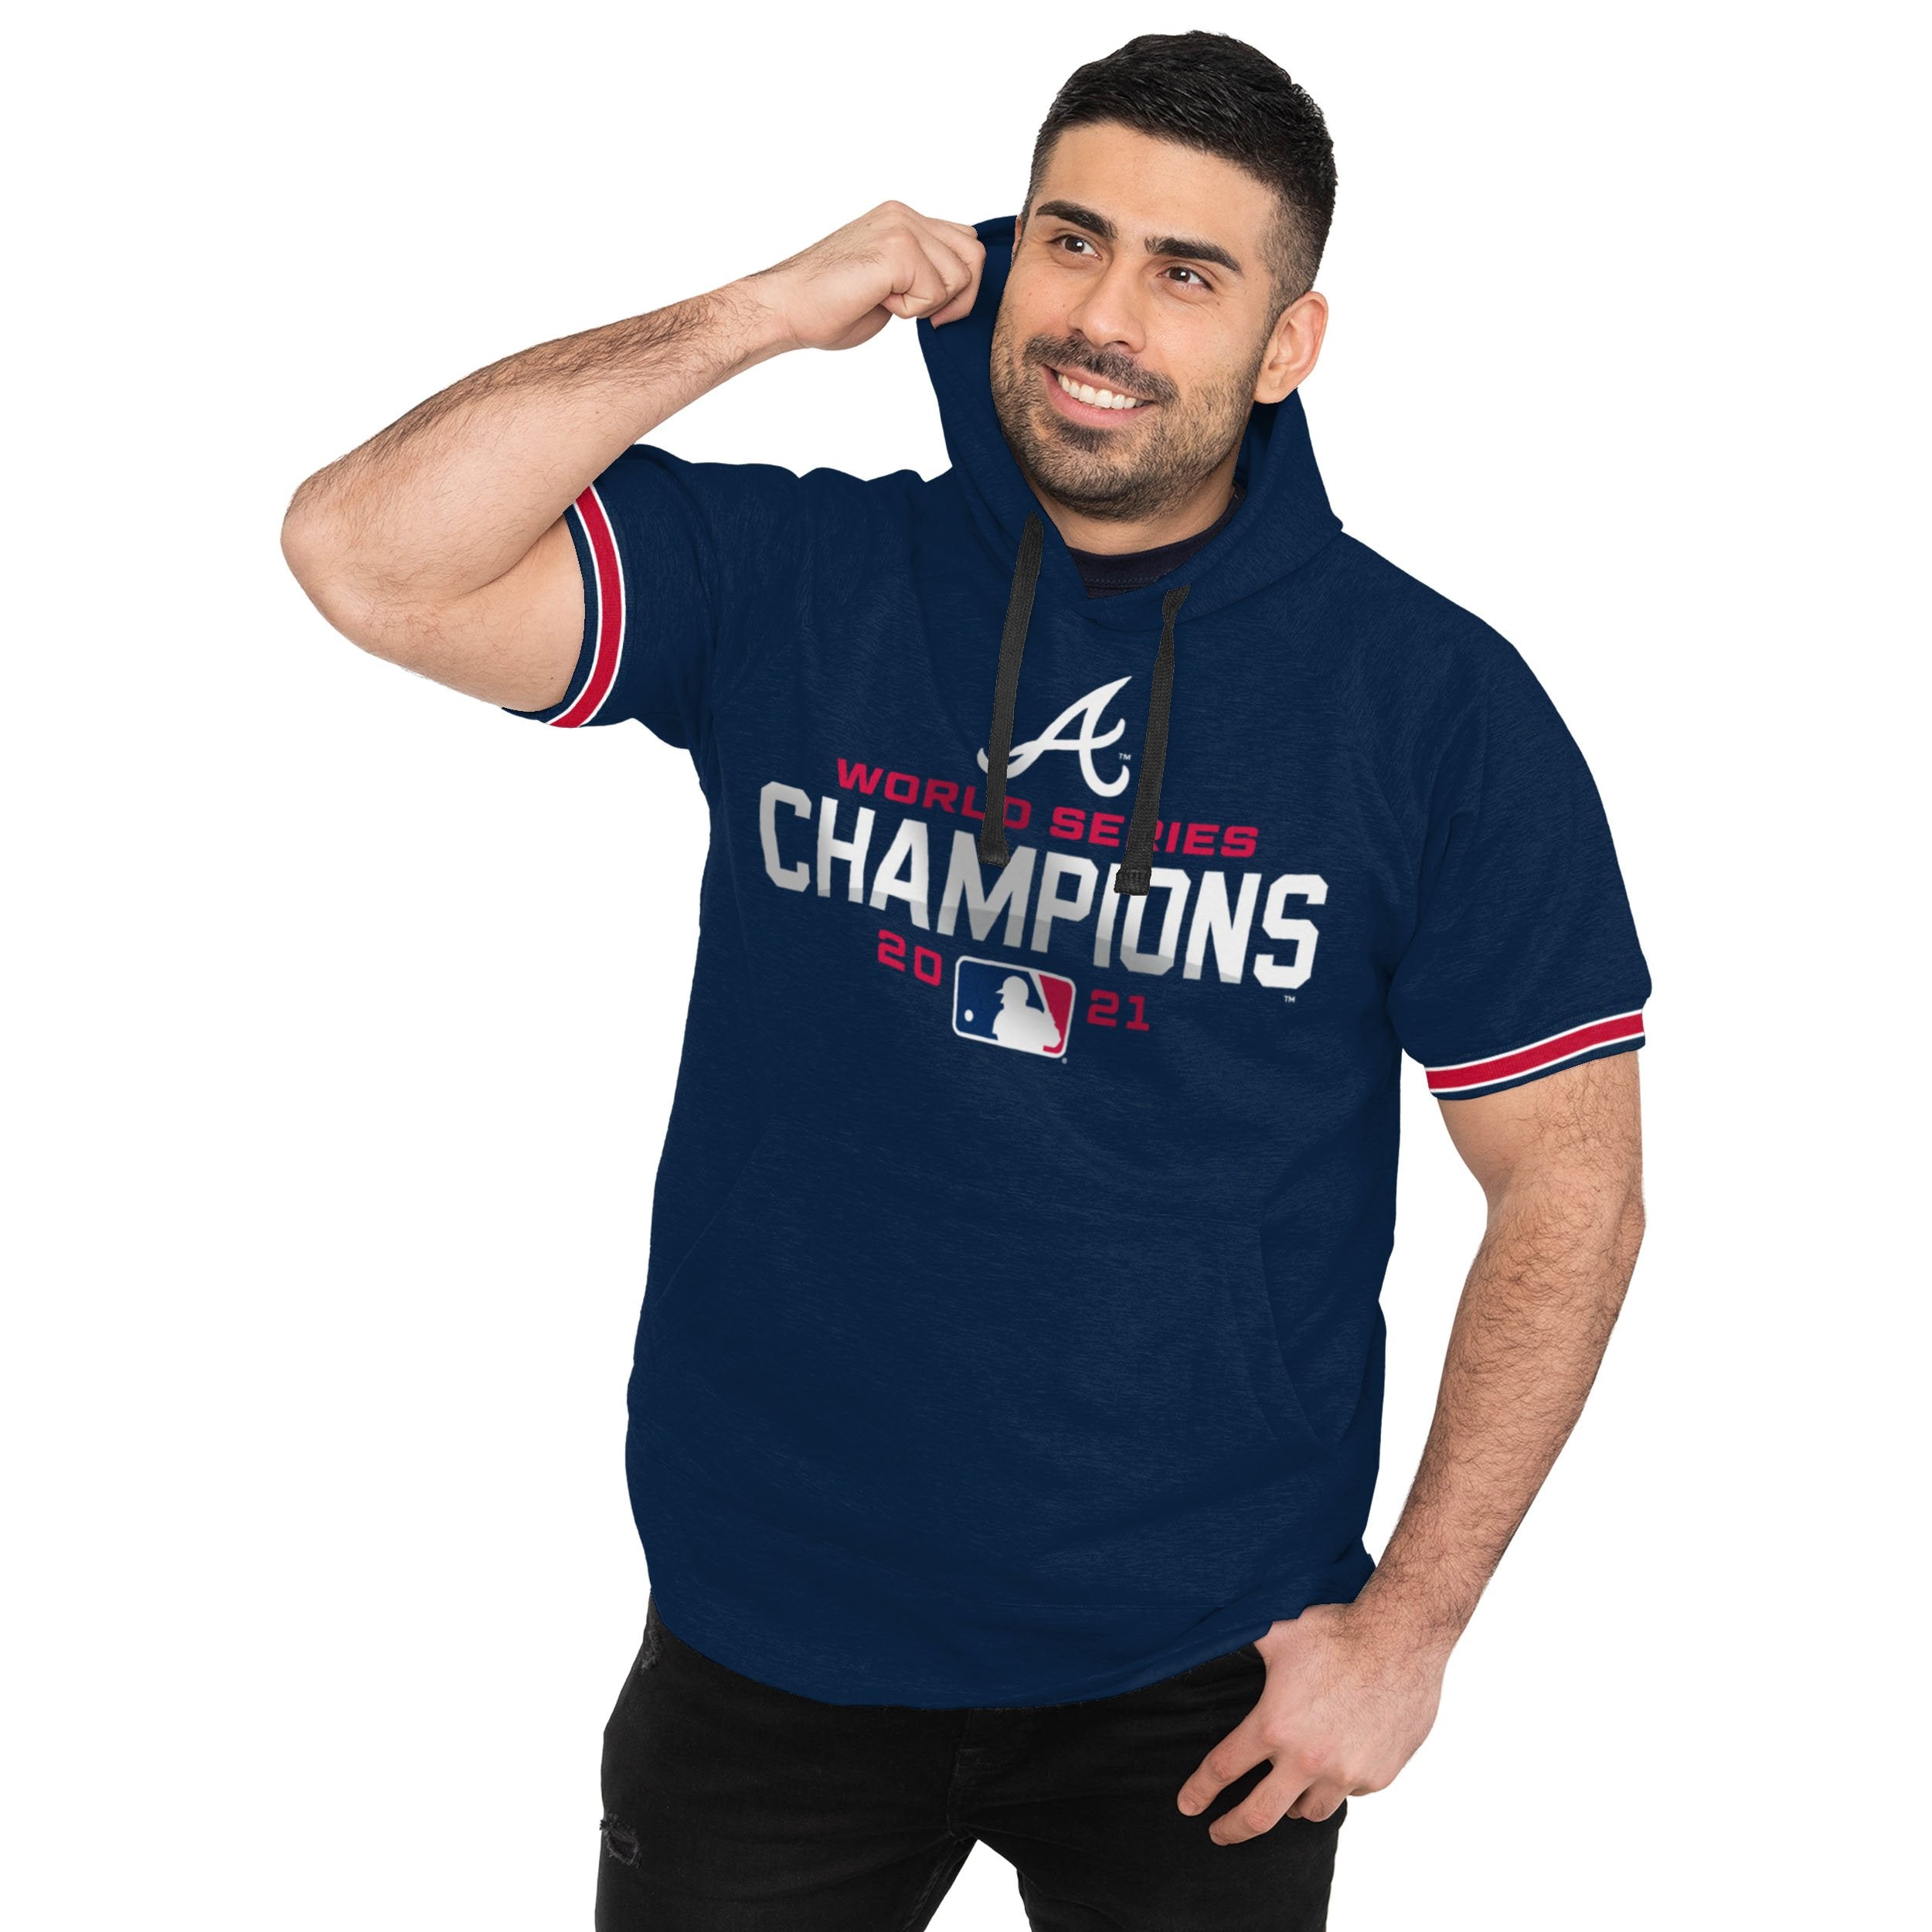 Atlanta Braves World Series Champion 2021 Sweatshirt For Fan